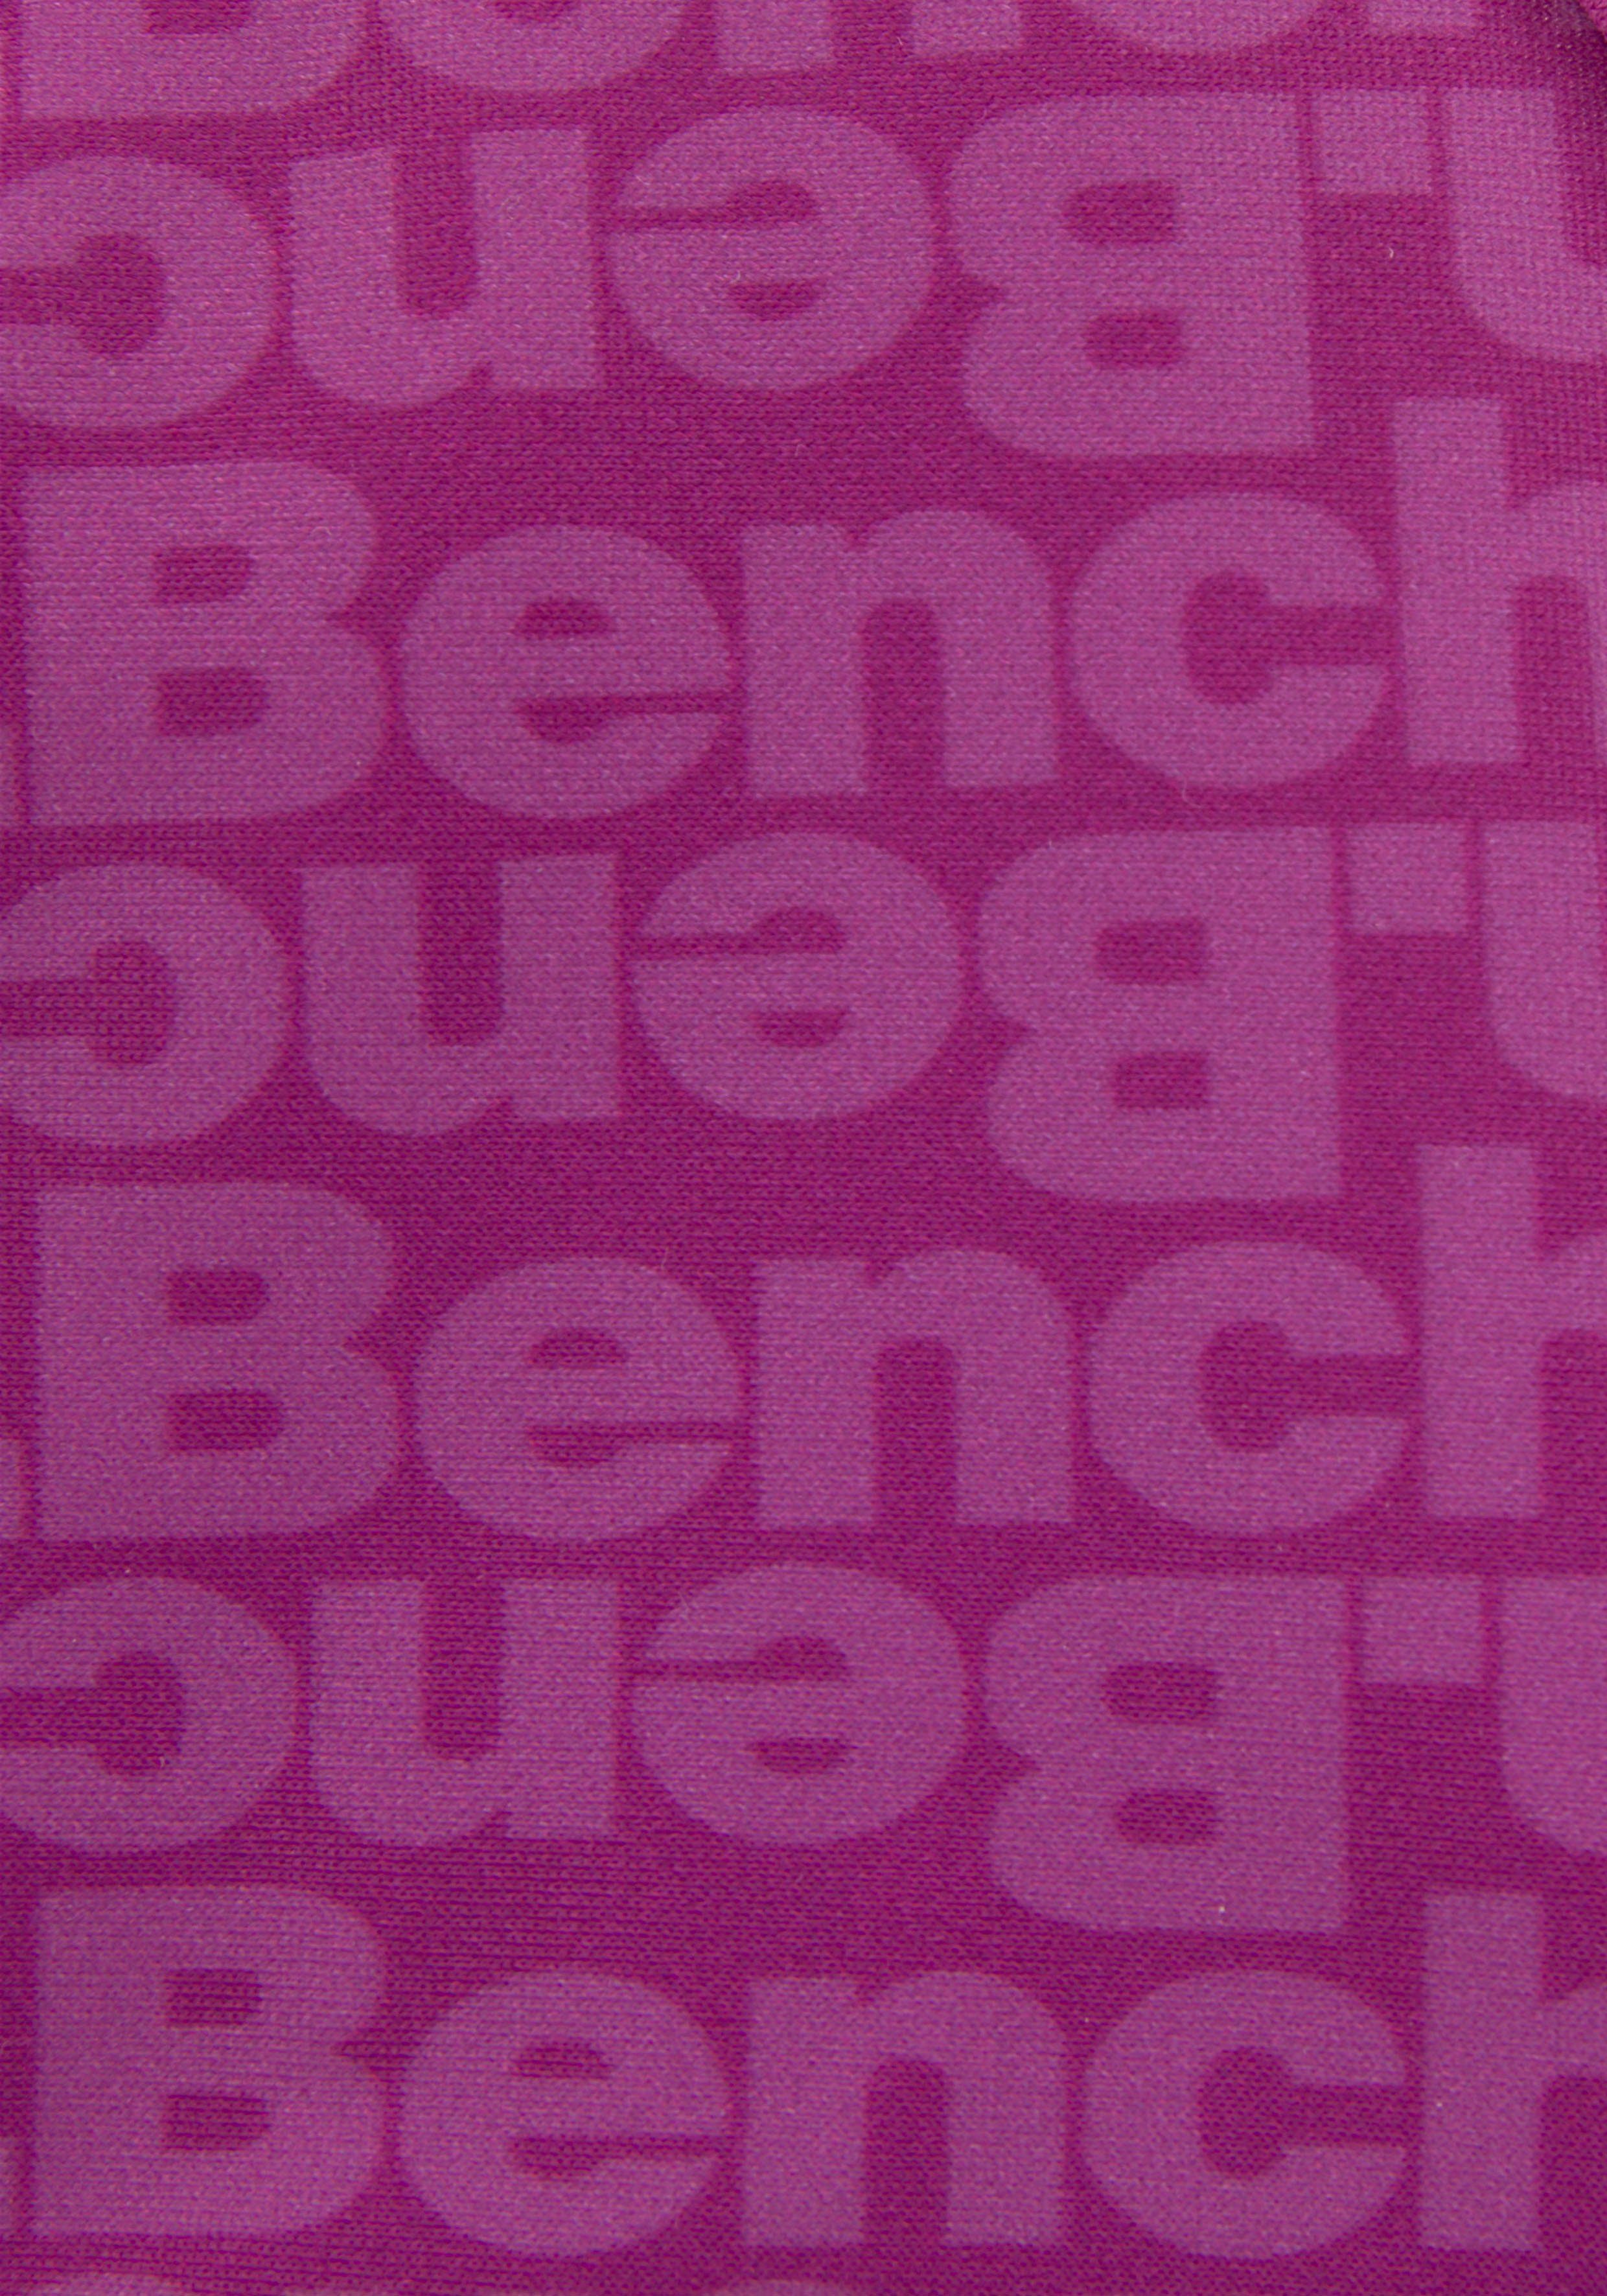 Bench. Bustier-Bikini in sportlichem Design